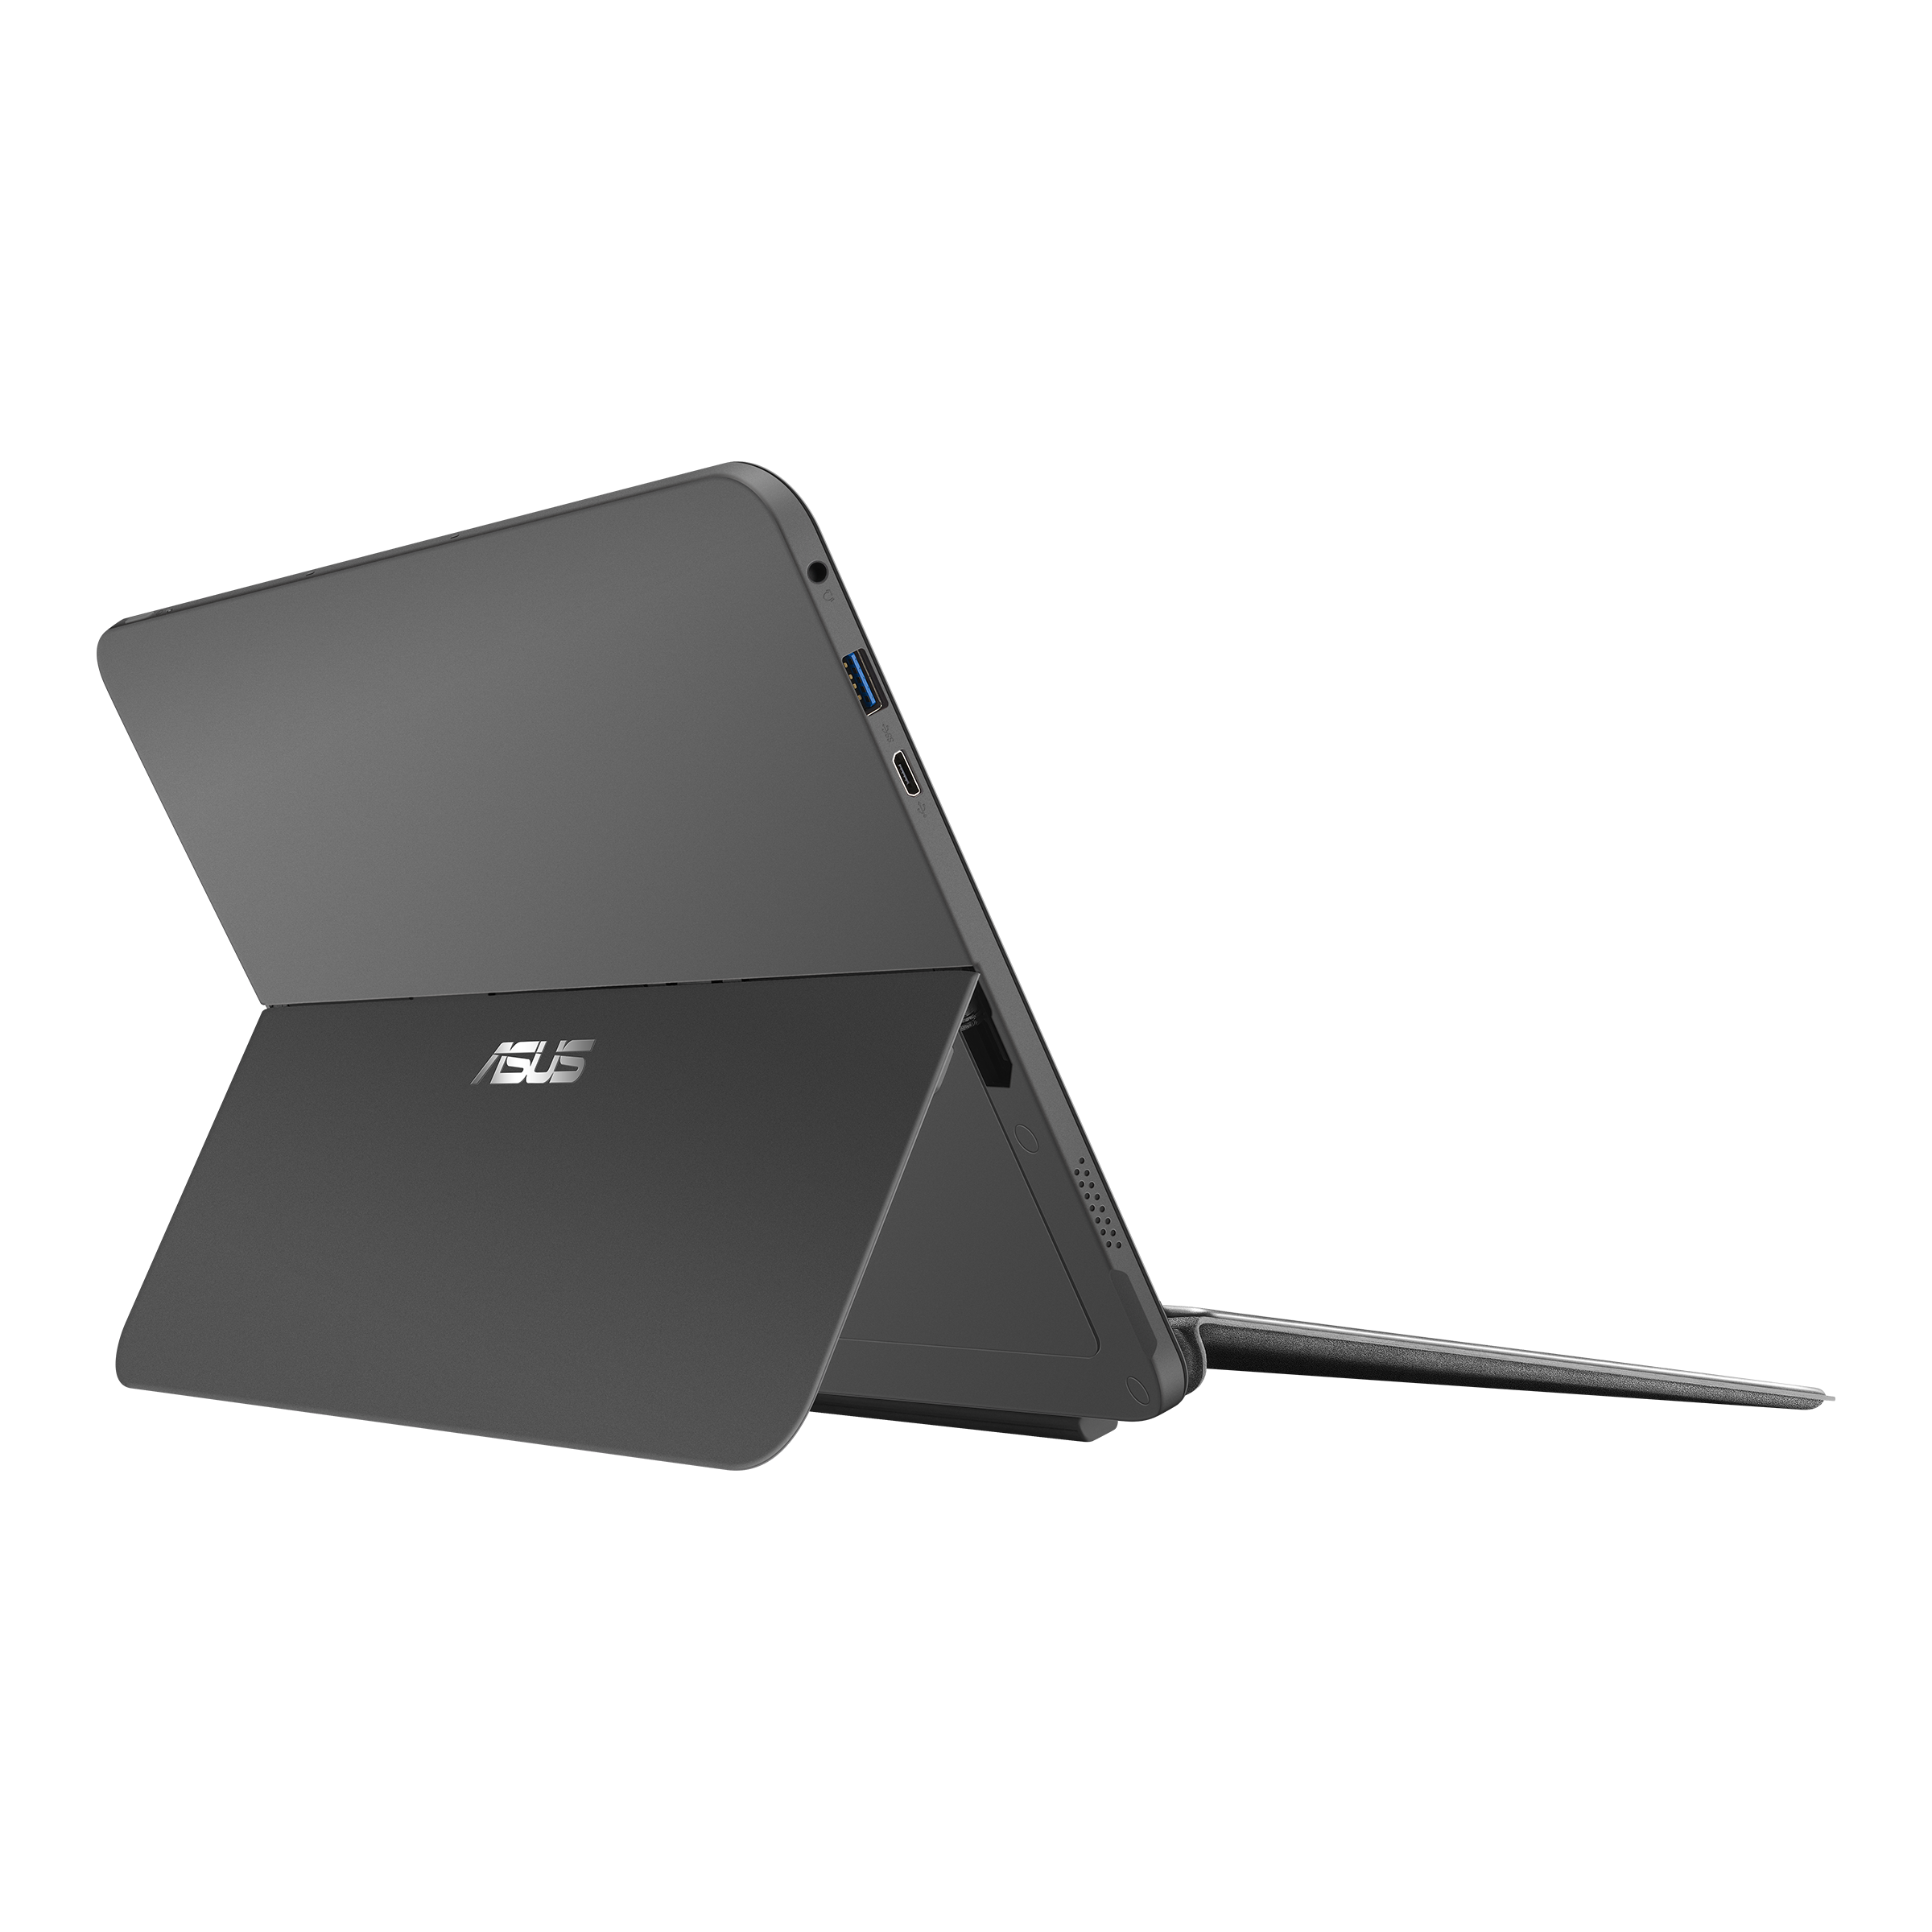 ASUS TransBook Mini T102HA タブレットノートPC